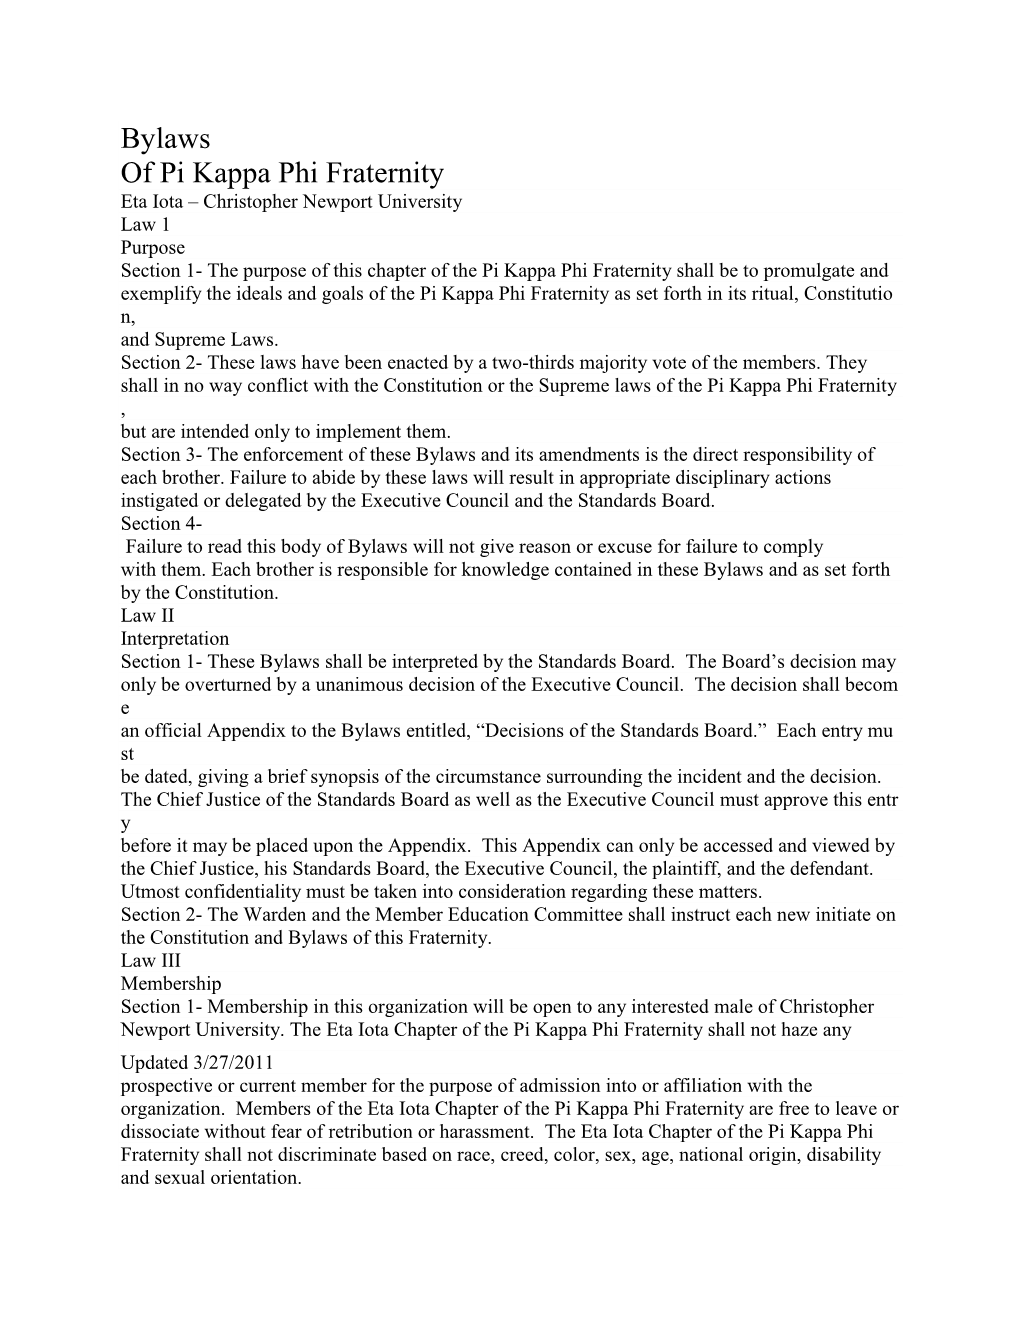 Bylaws of Pi Kappa Phi Fraternity